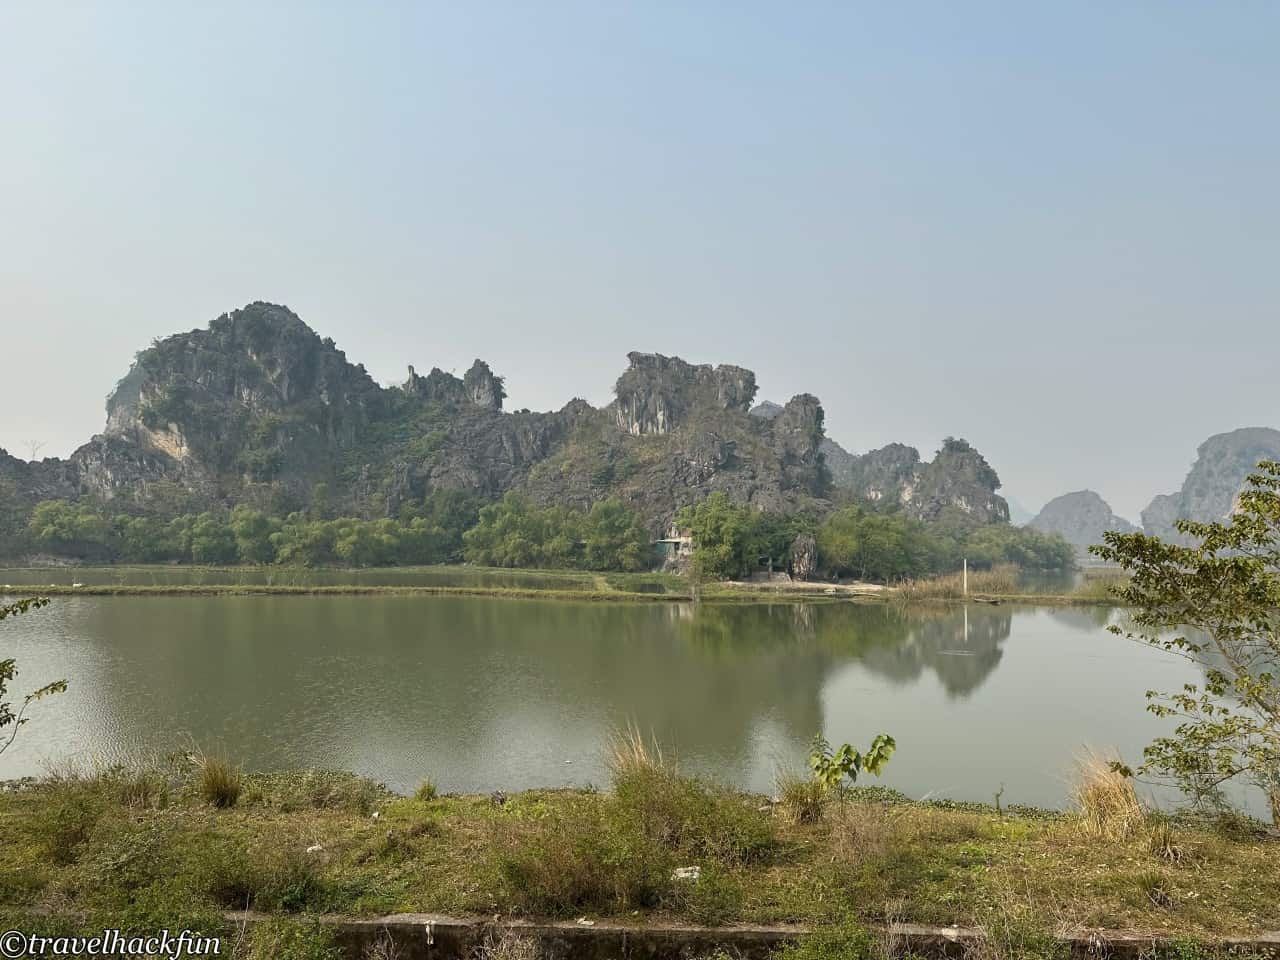 Cuc Phoung Național Park,菊芳國家公園 3